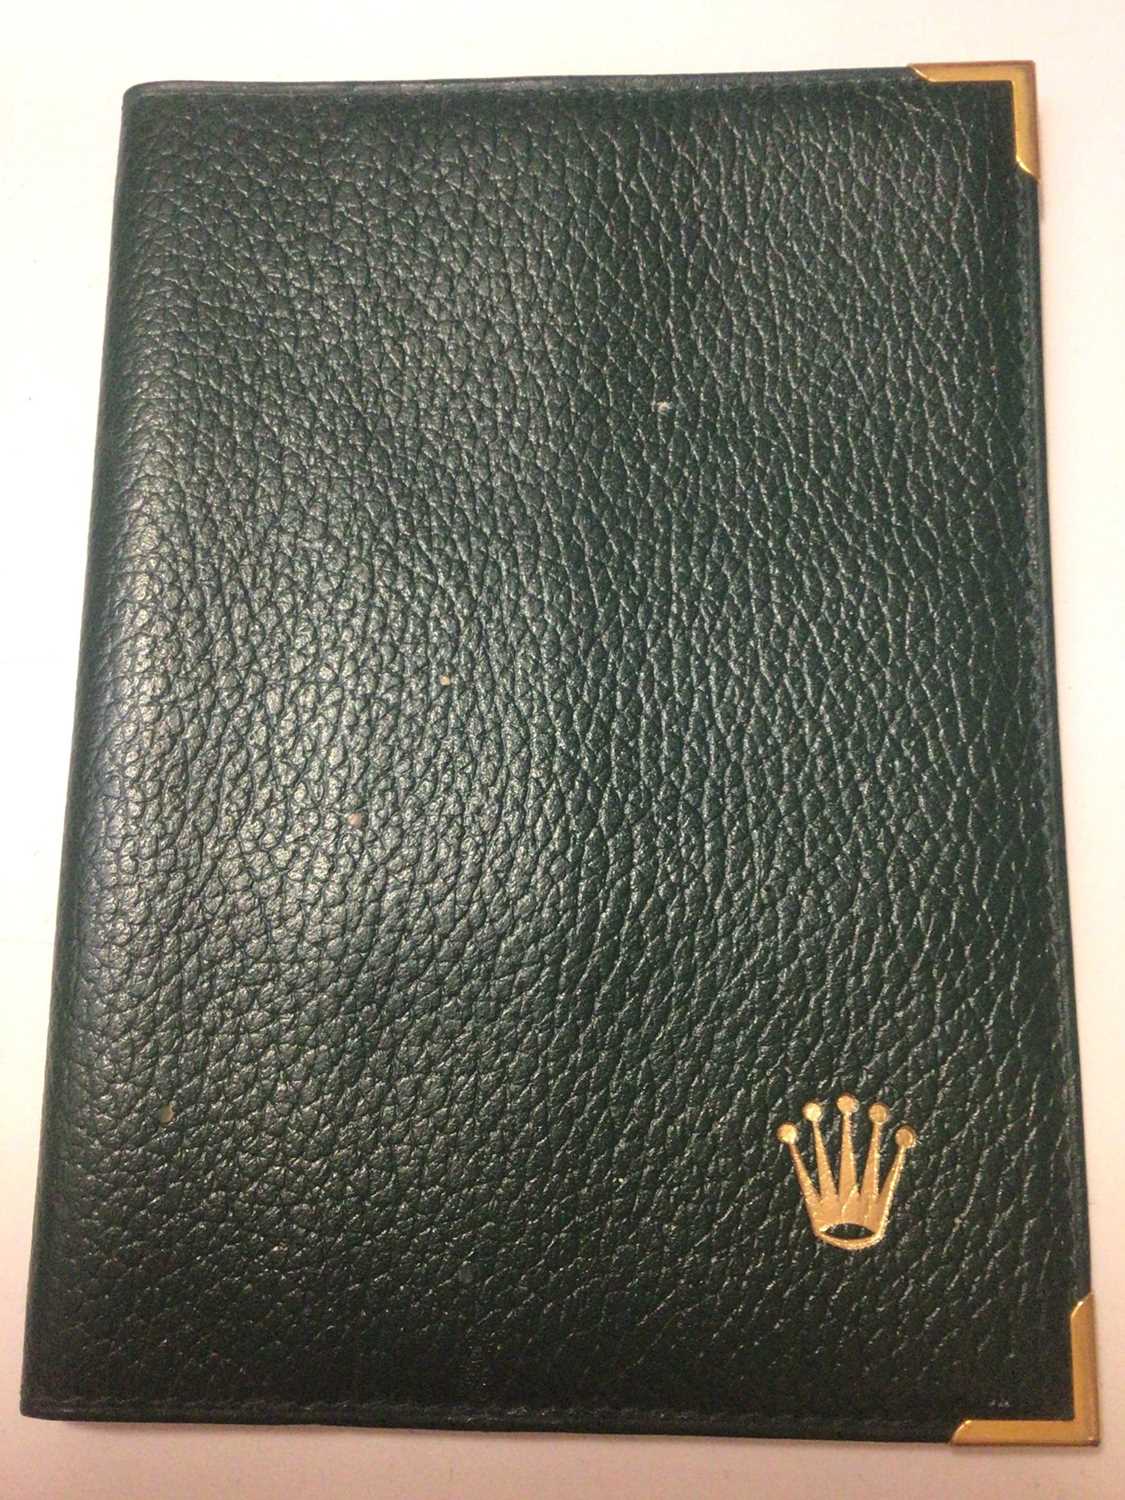 Vintage Rolex wallet with logo